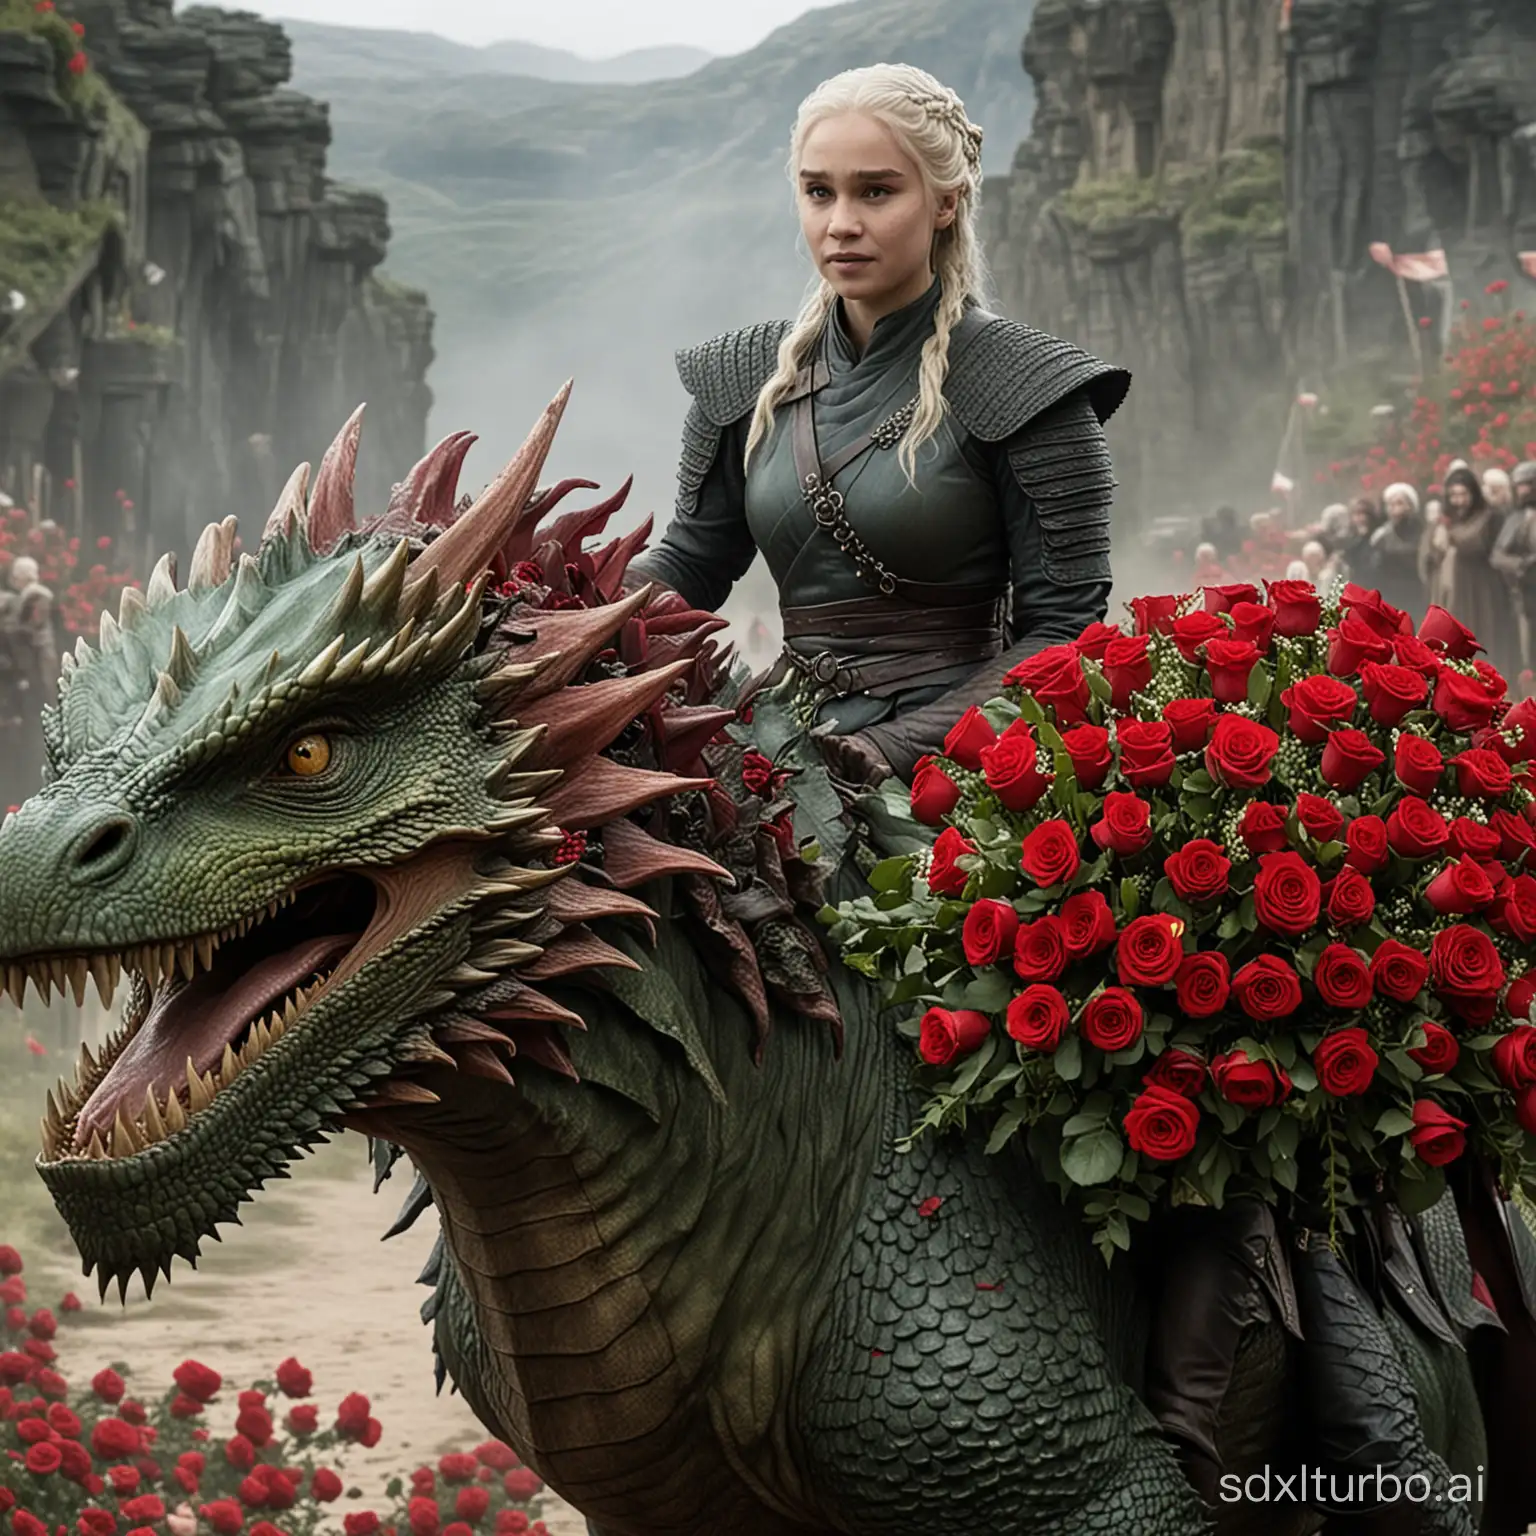 Daenerys-Targaryen-Riding-Green-Dragon-with-Red-Rose-Bouquet